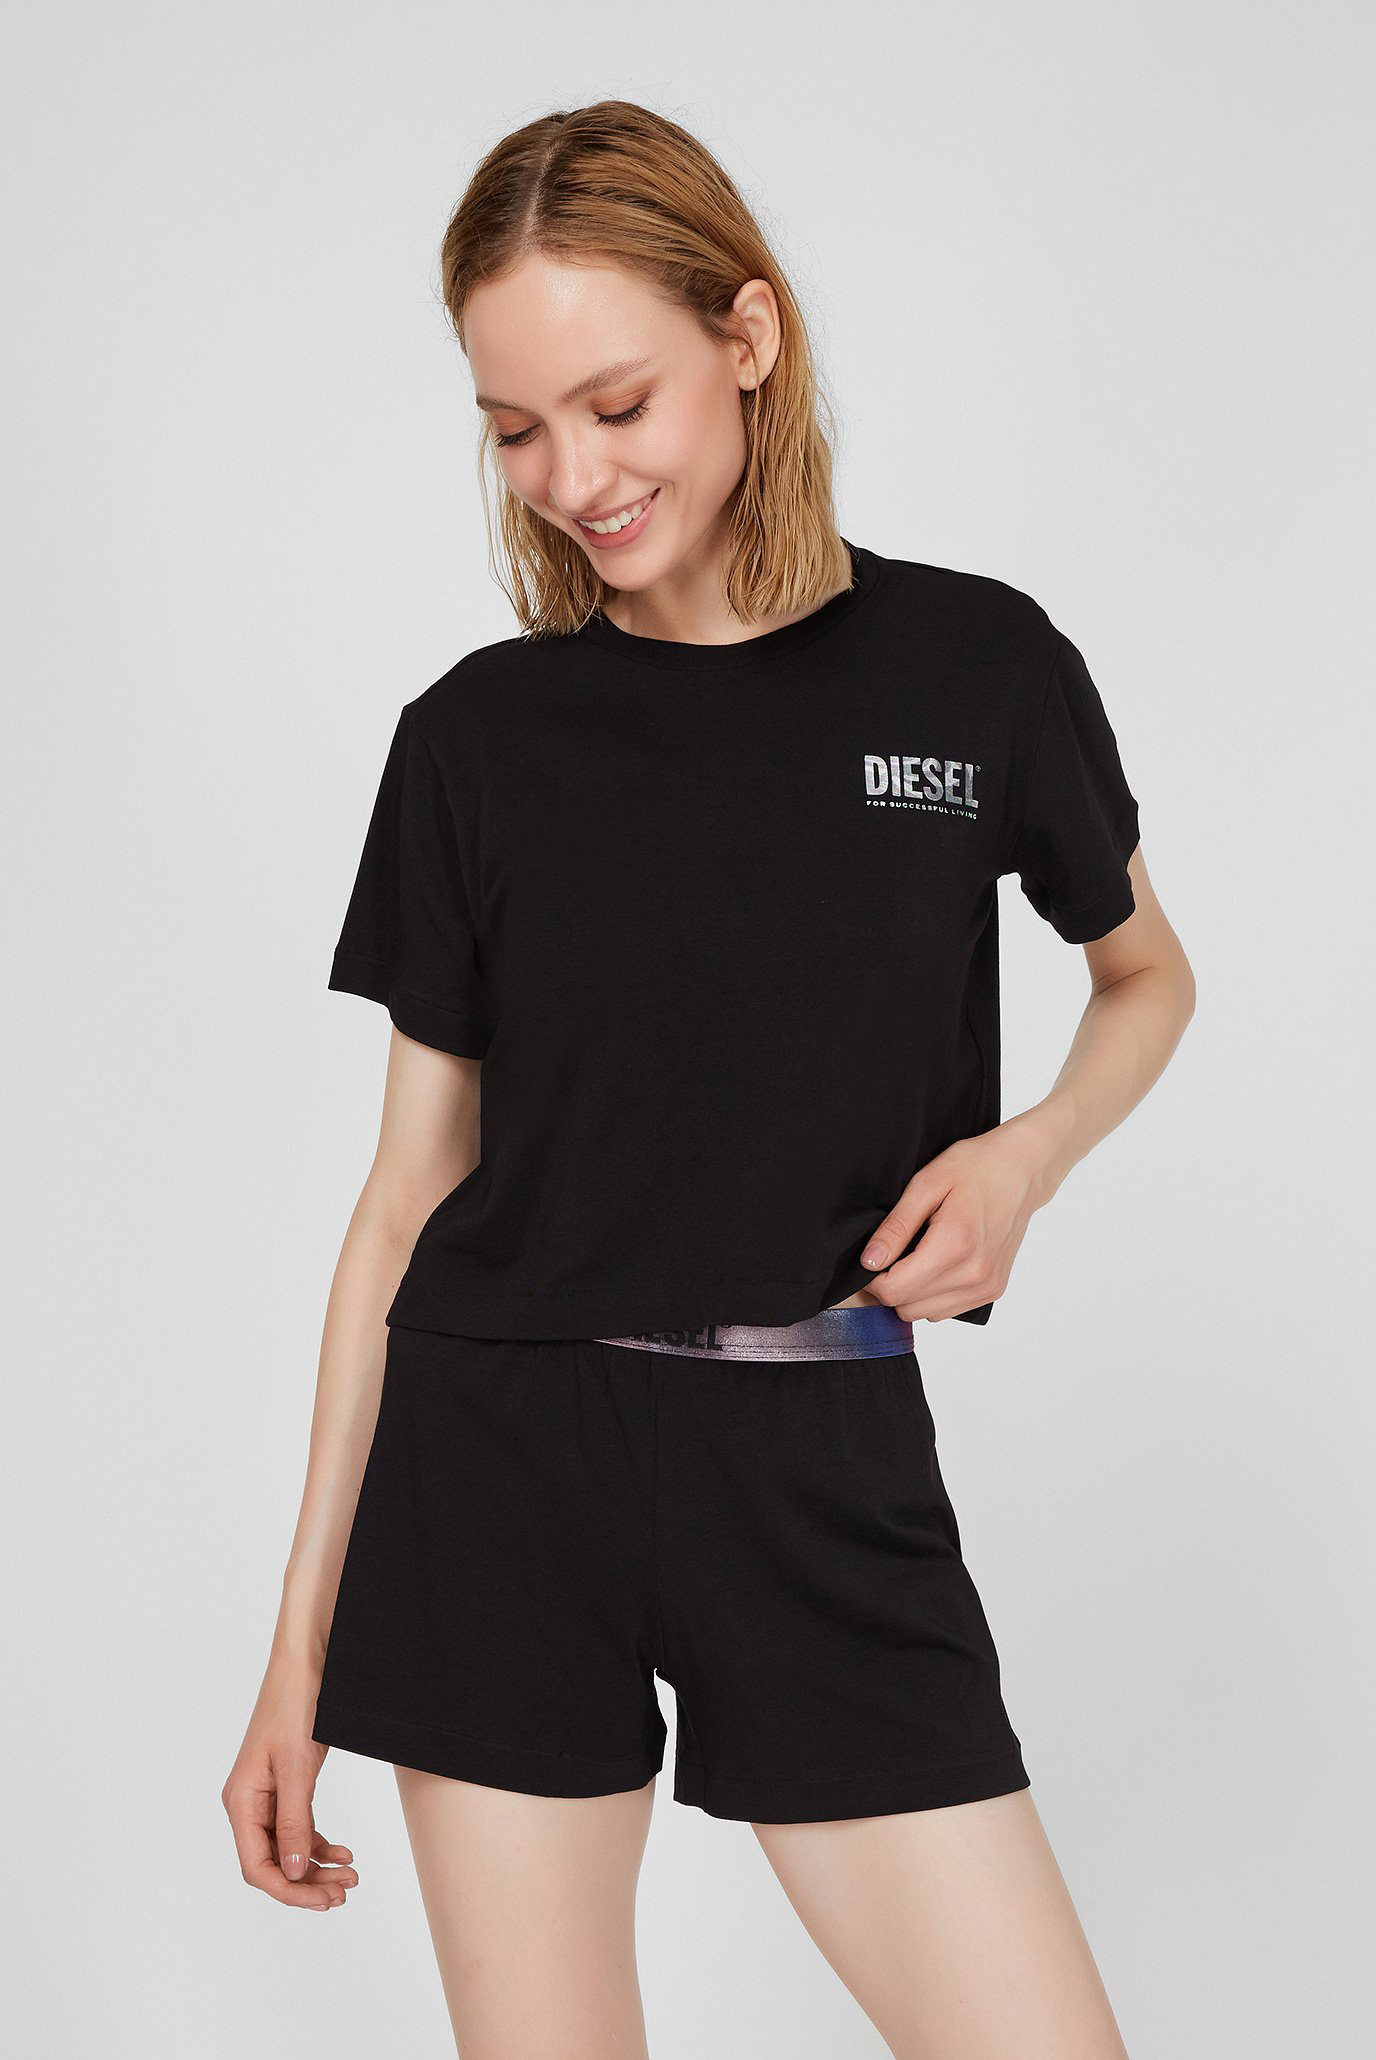 Женская черная пижама (футболка, шорты) UFSET-PIJIMMY 1